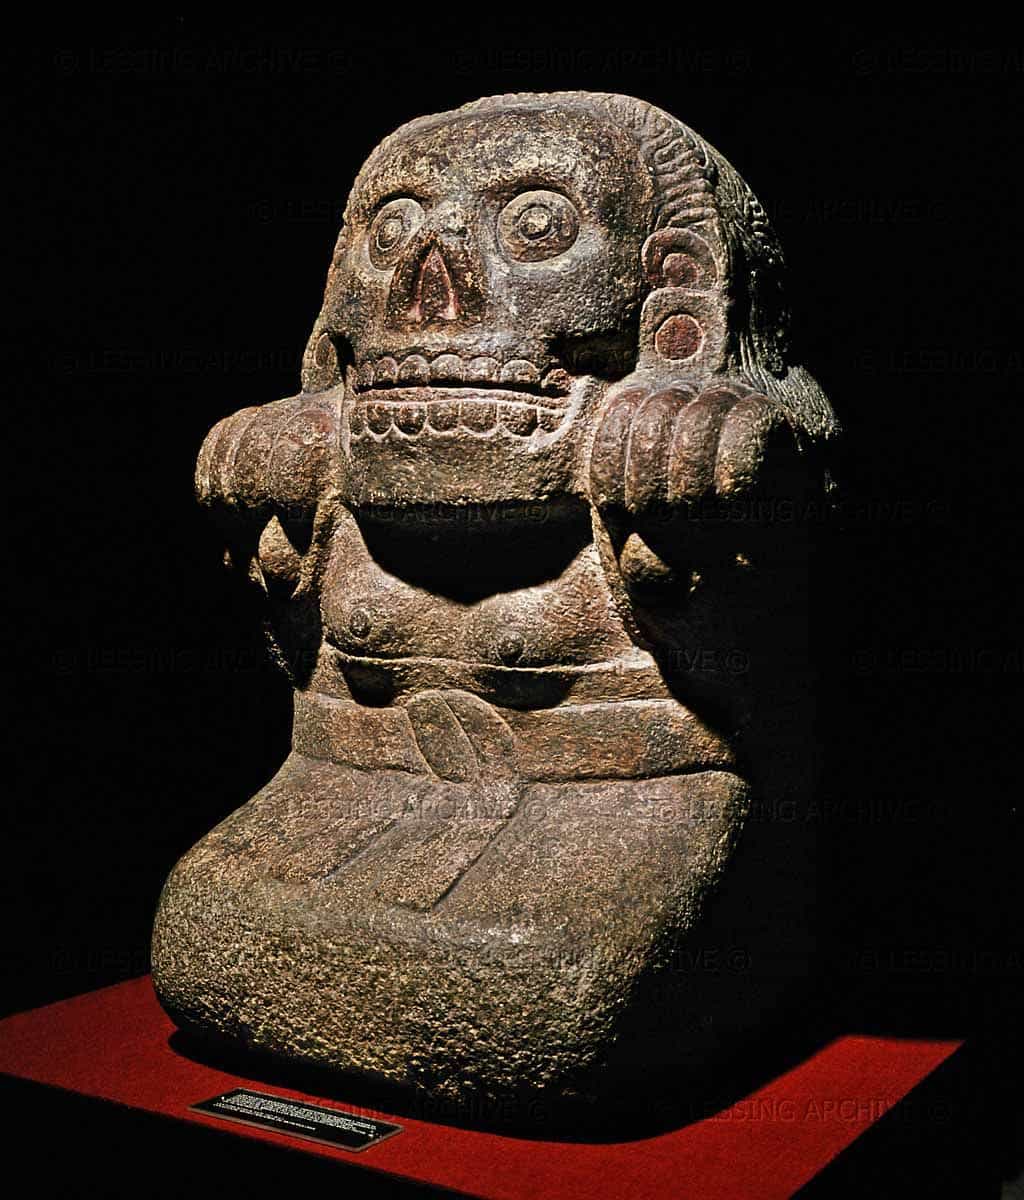 058 阿兹特克神像 Sculpture of Aztec Spirit